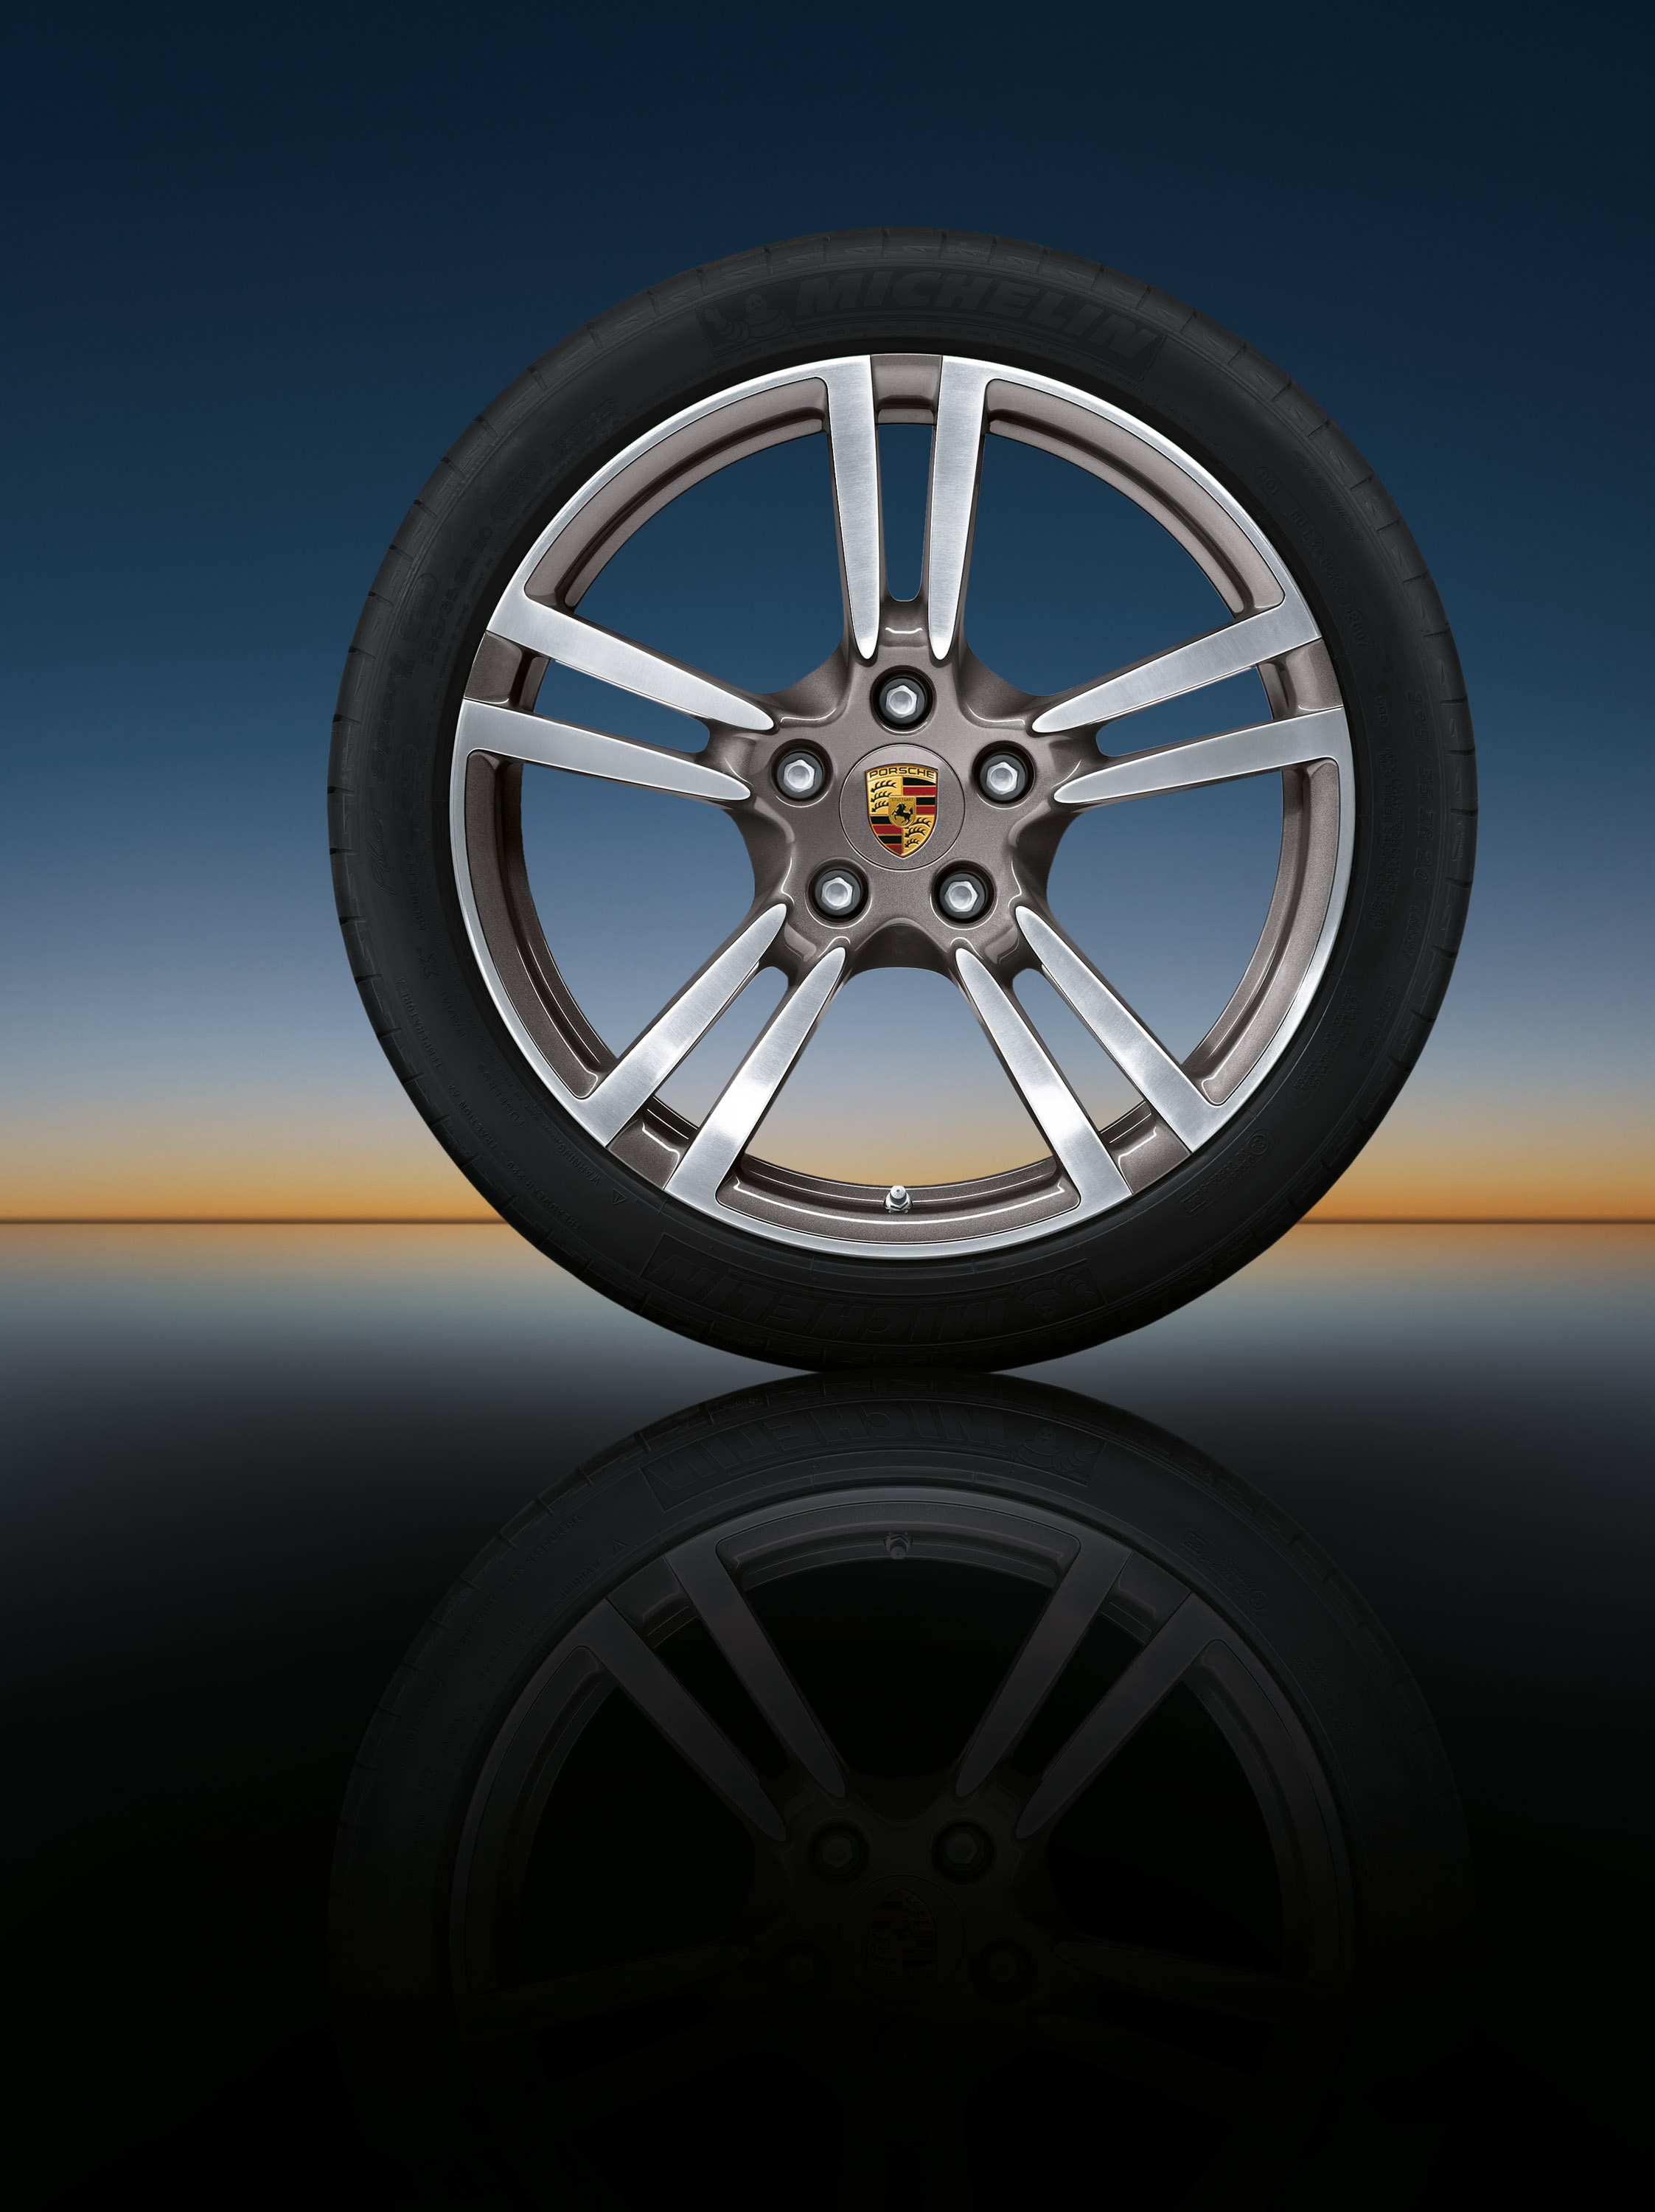 911 Turbo II wheels for the Panamera range